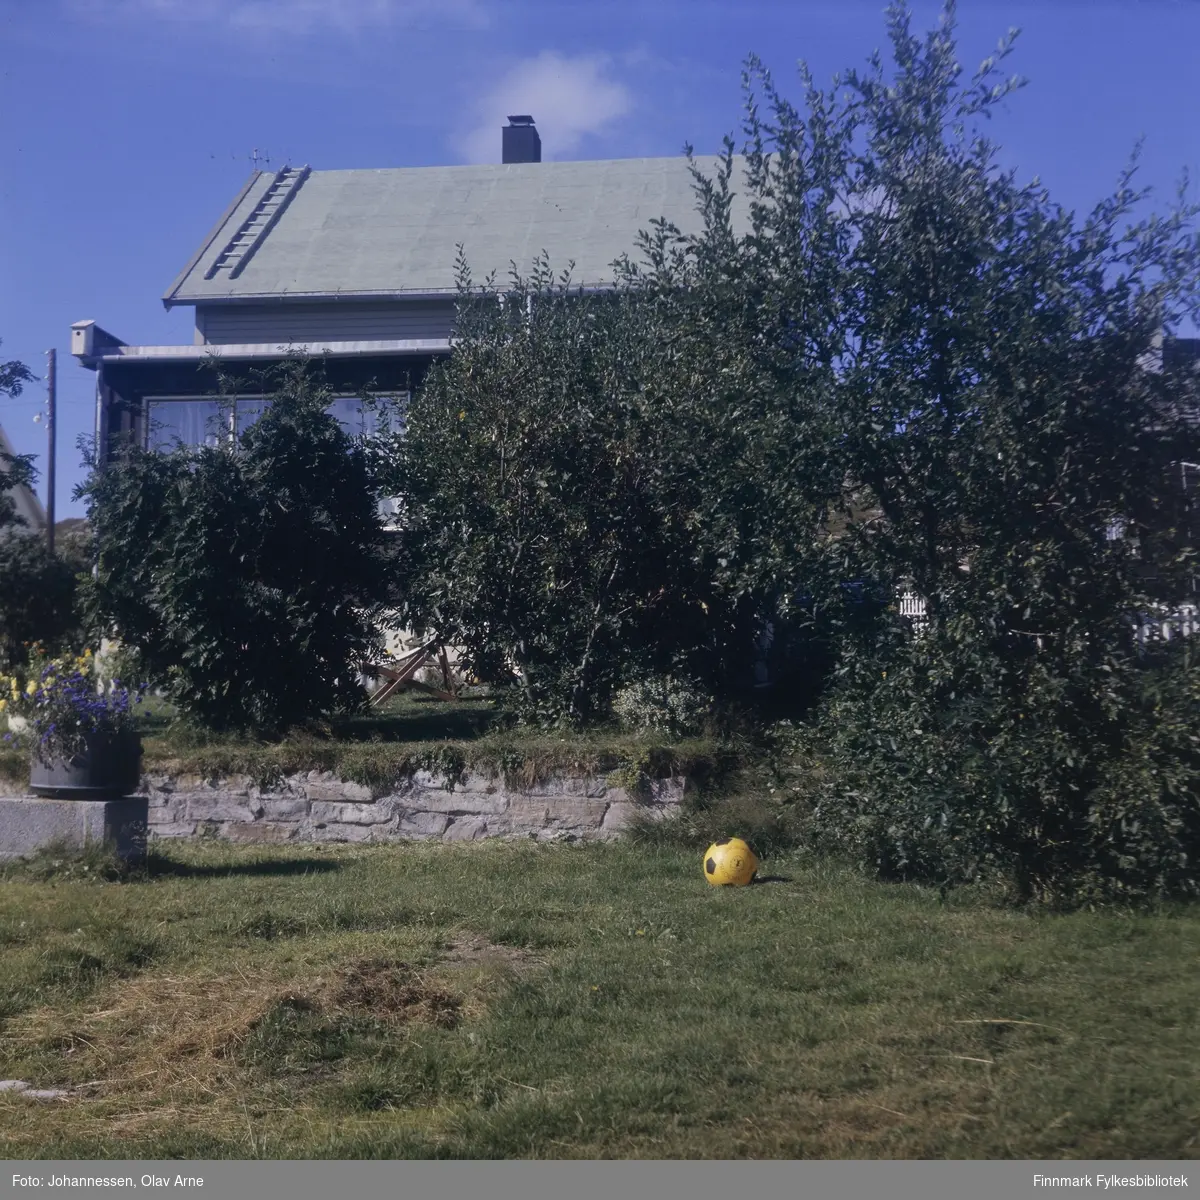 Foto av bolighus og hage

Trolig tatt på 1960/70-tallet

Antagelig i Finnmark 